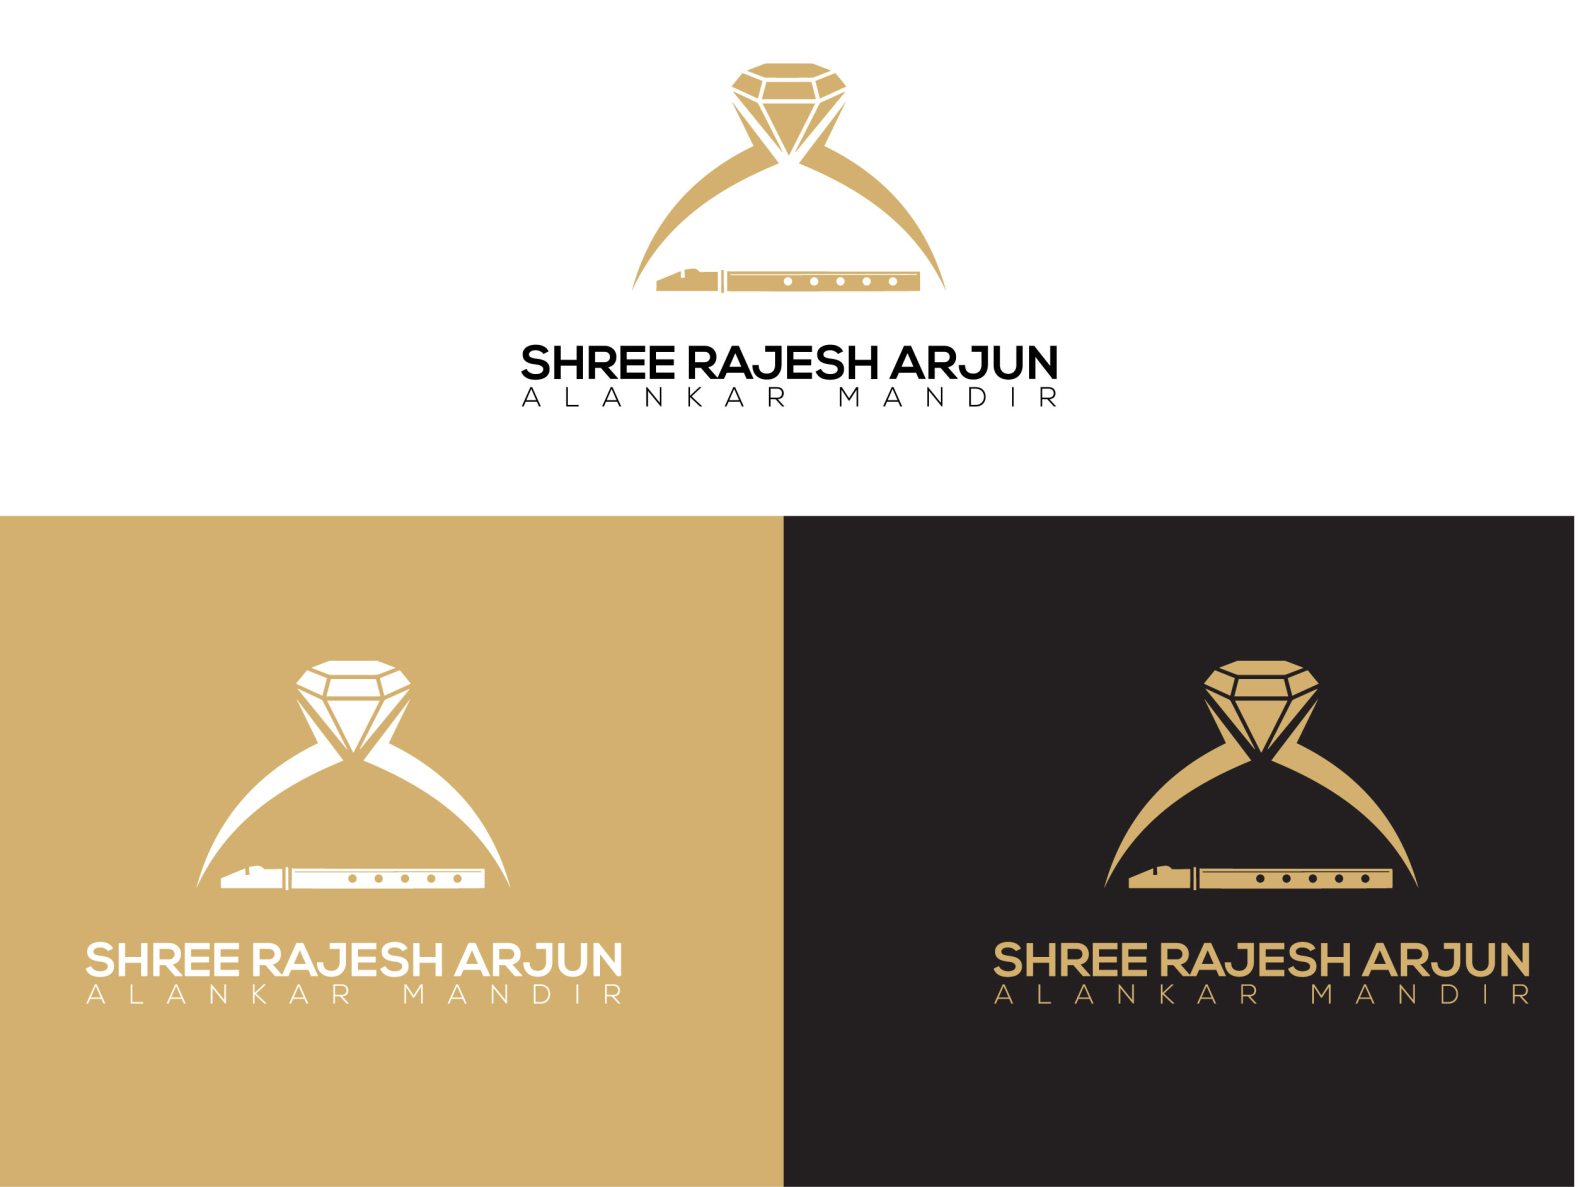 rajesh designs - Rajeshdesigns - Medium